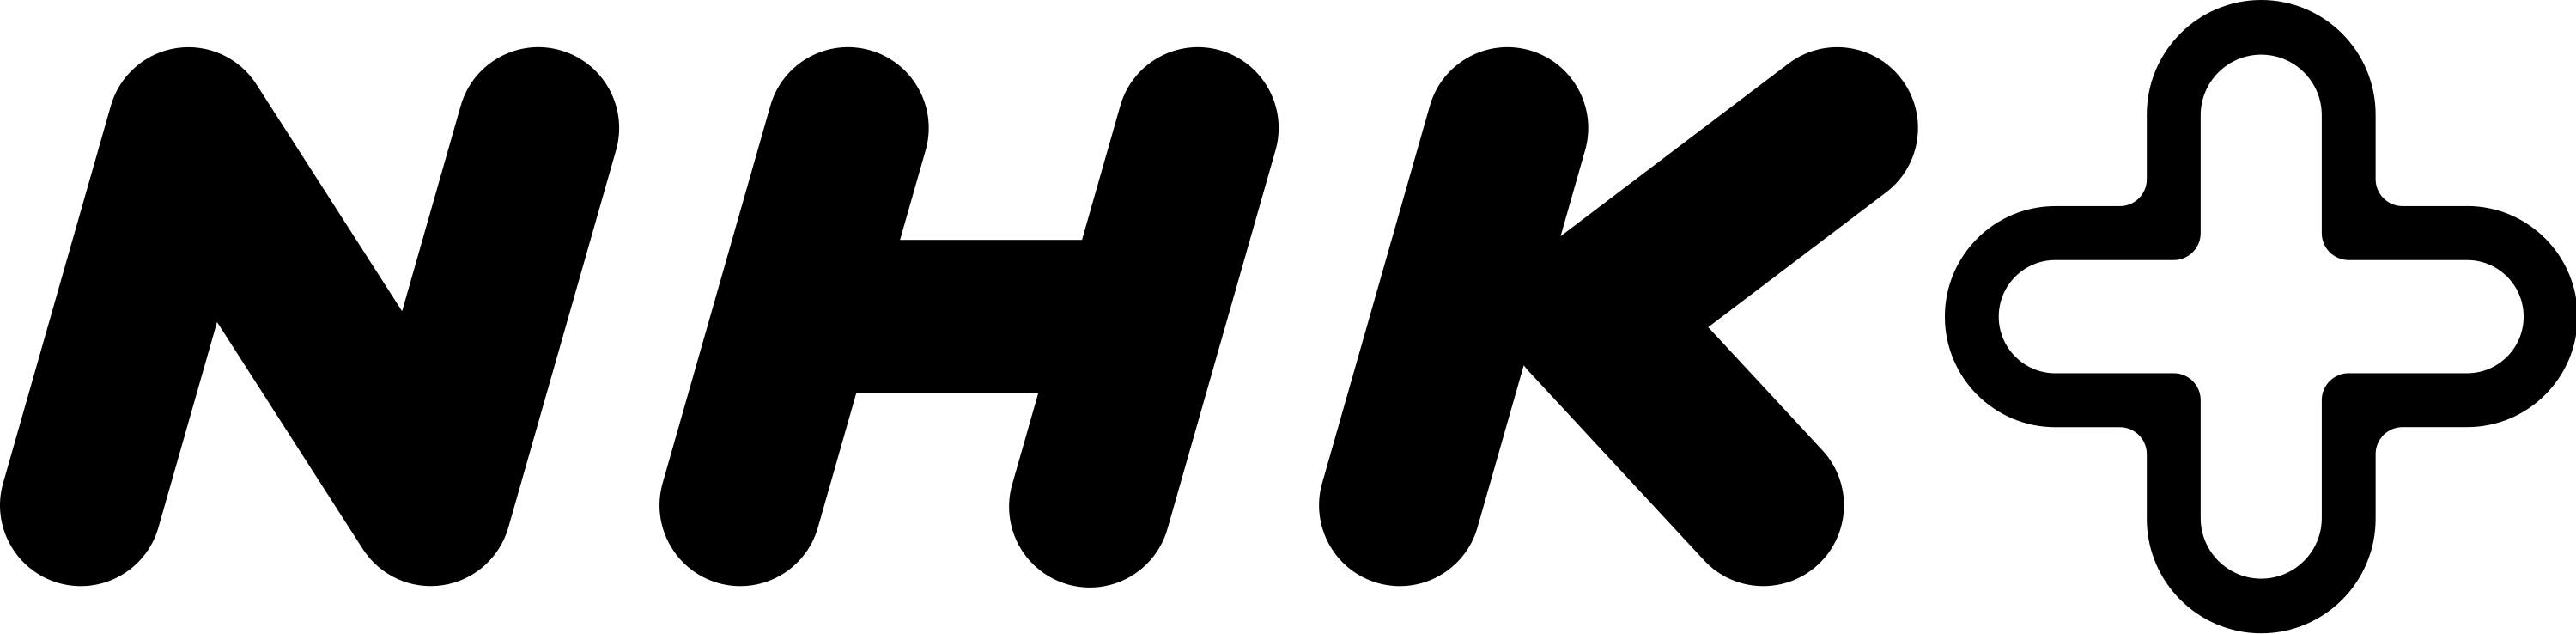 NHK Plus Logo Download in SVG Vector or PNG File Format